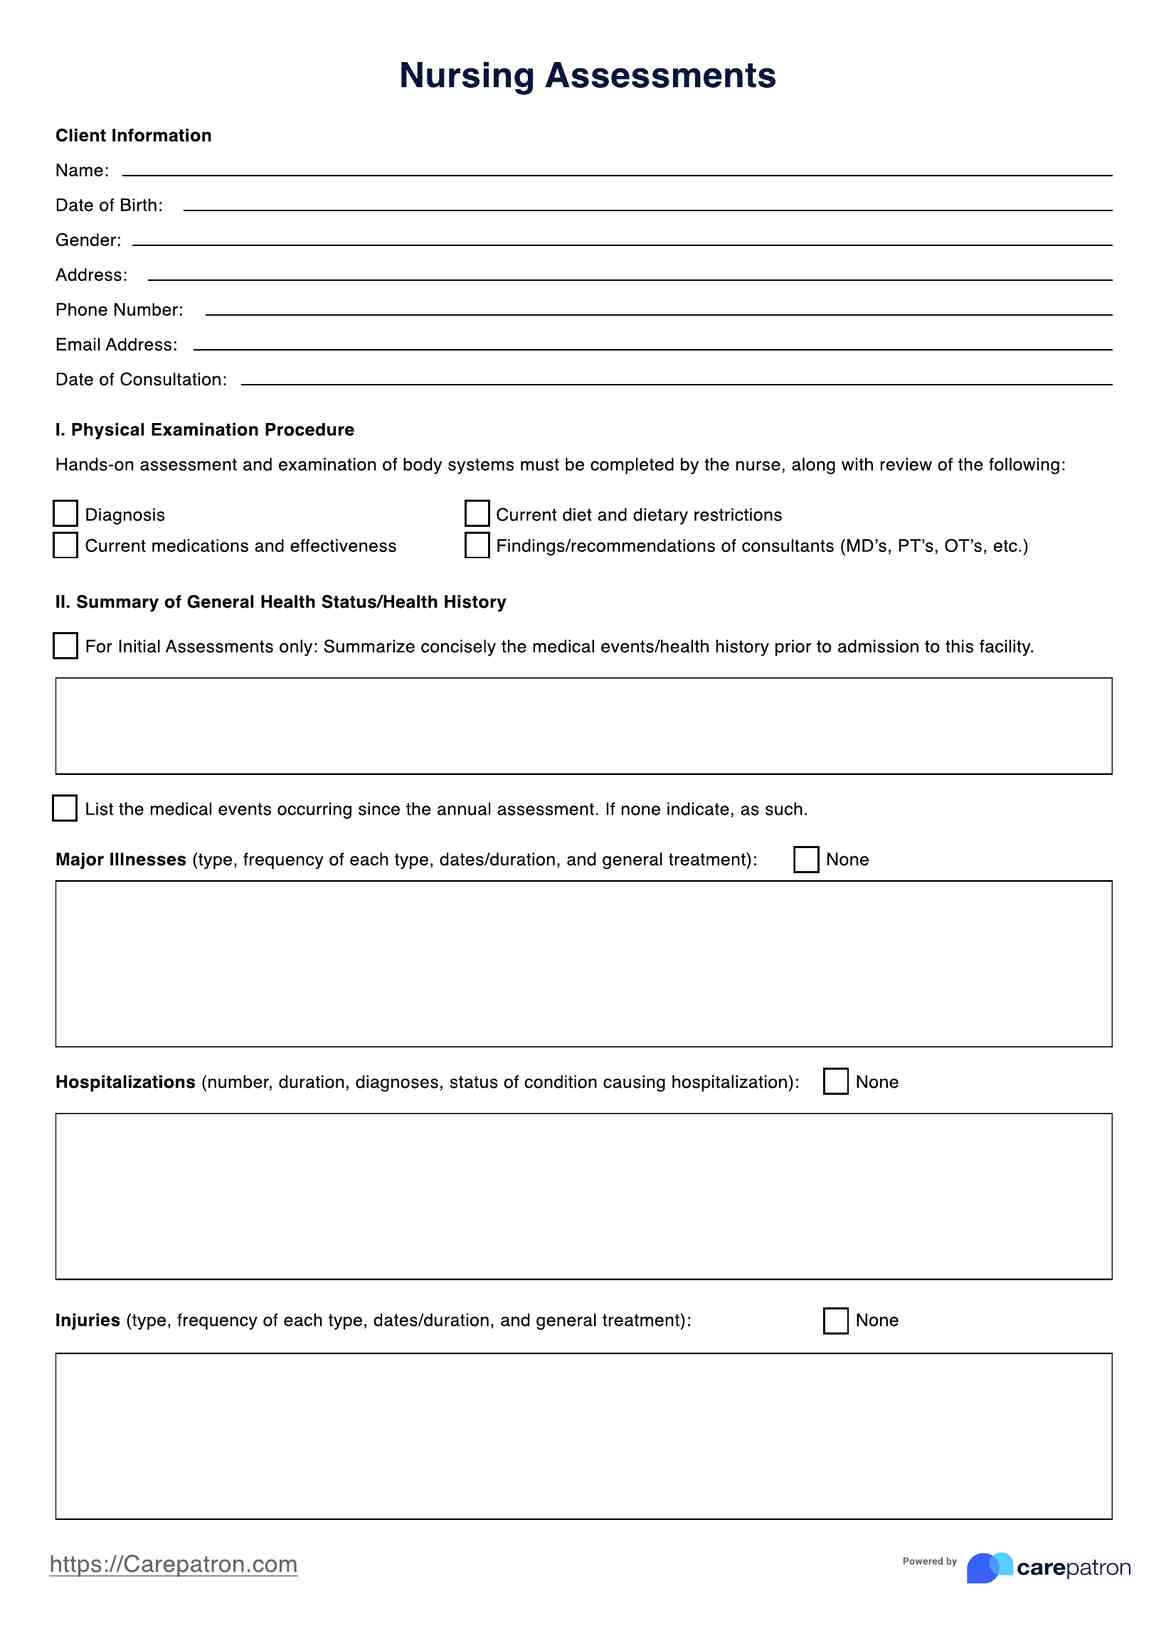 Nursing Assessment PDF Example